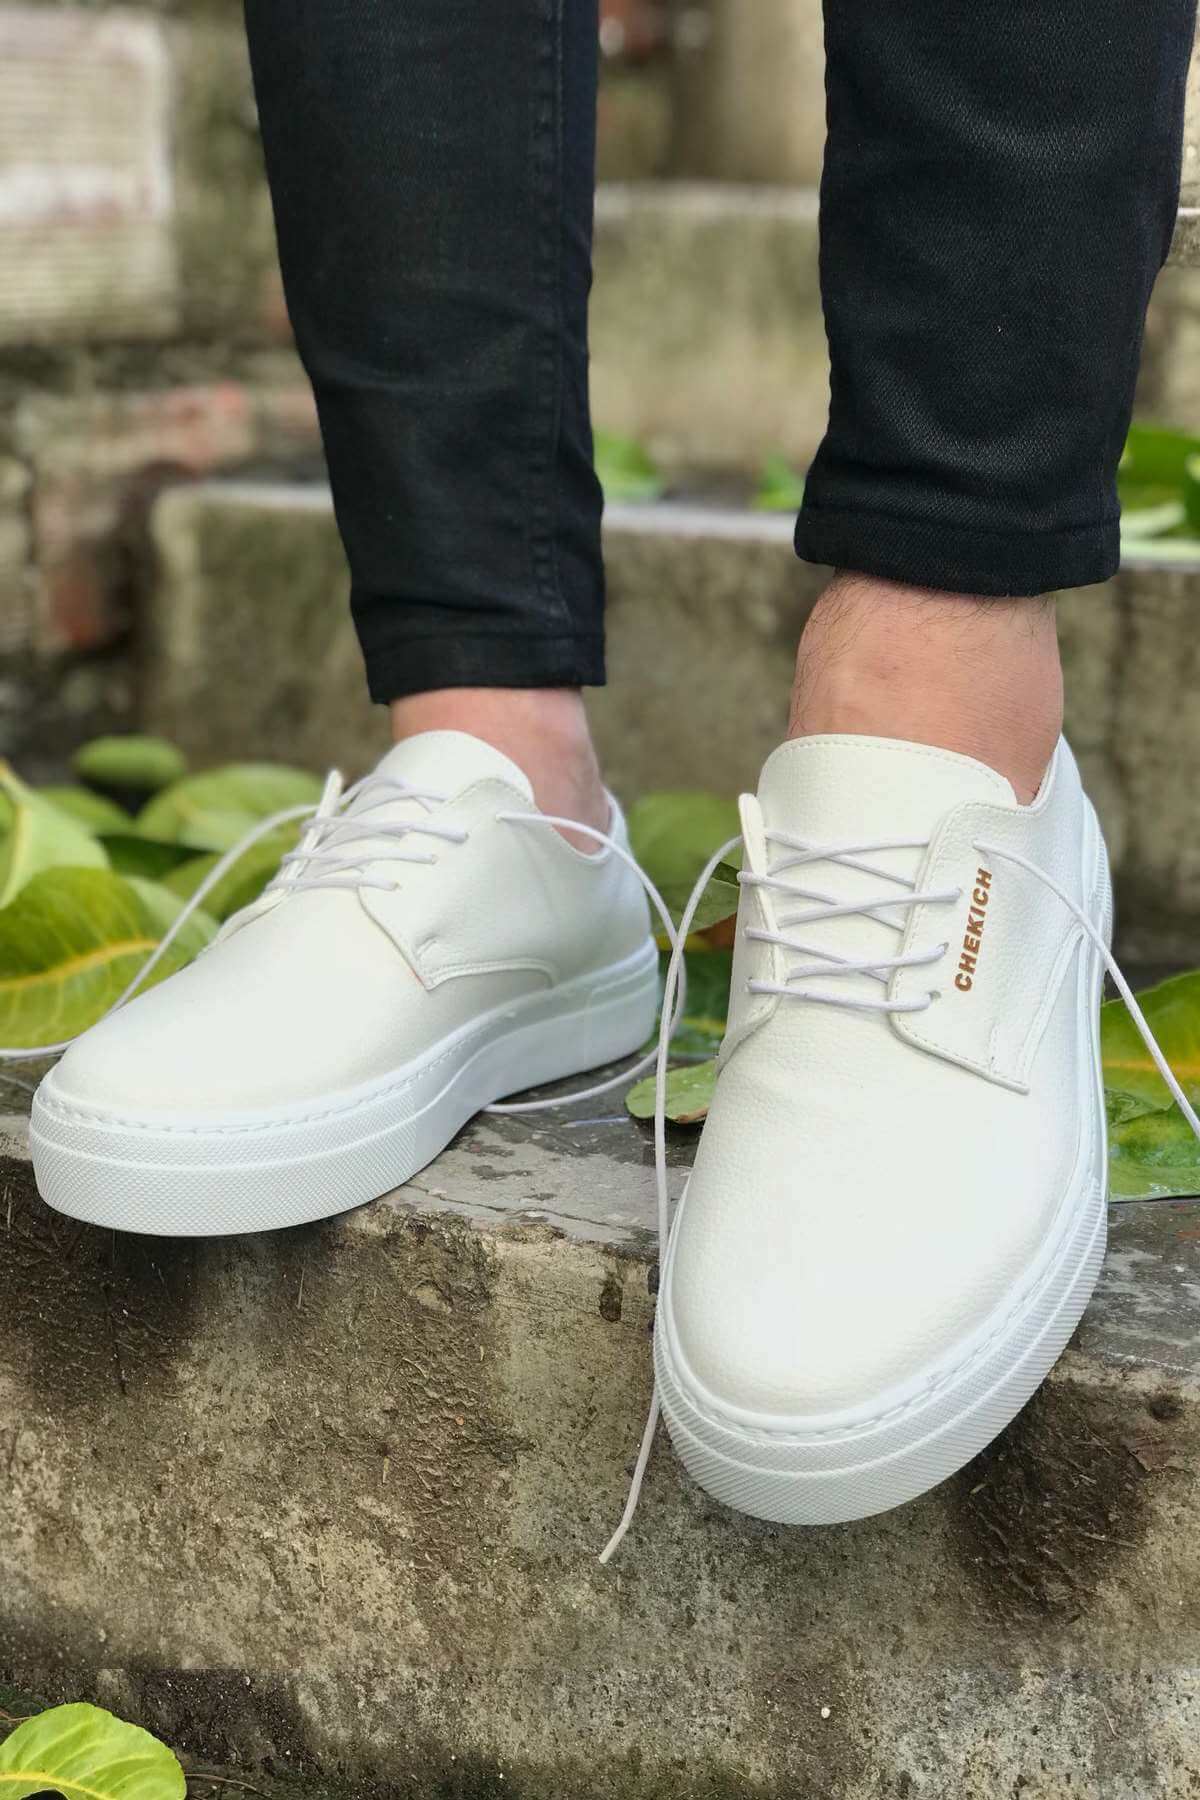 Men's White Sports Shoes